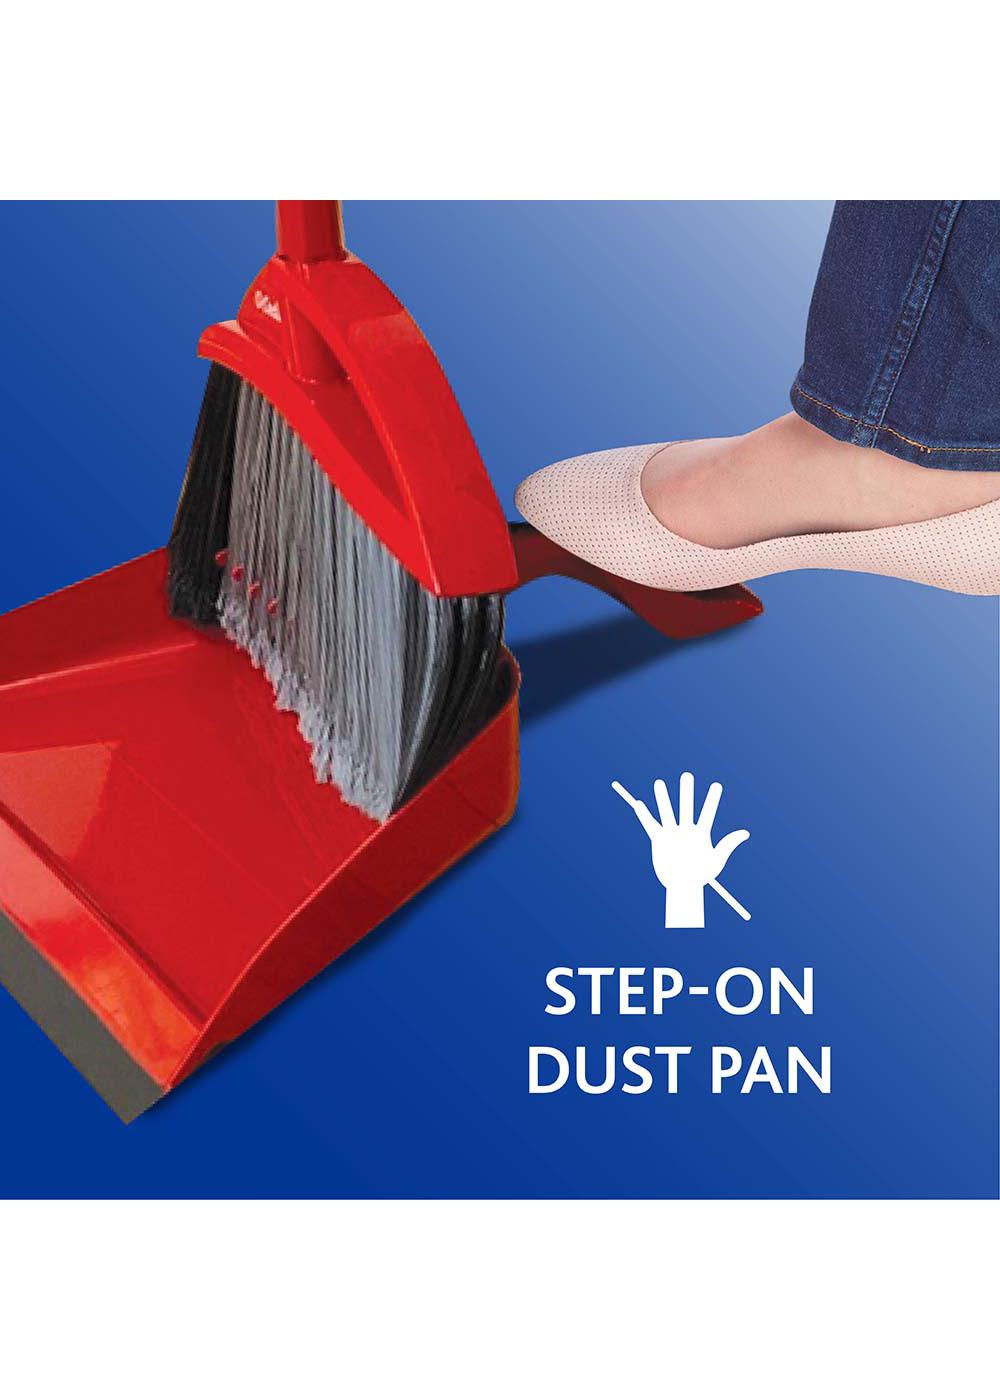 O-Cedar PowerCorner Pet Pro Broom with Step-On Dust Pan; image 9 of 9